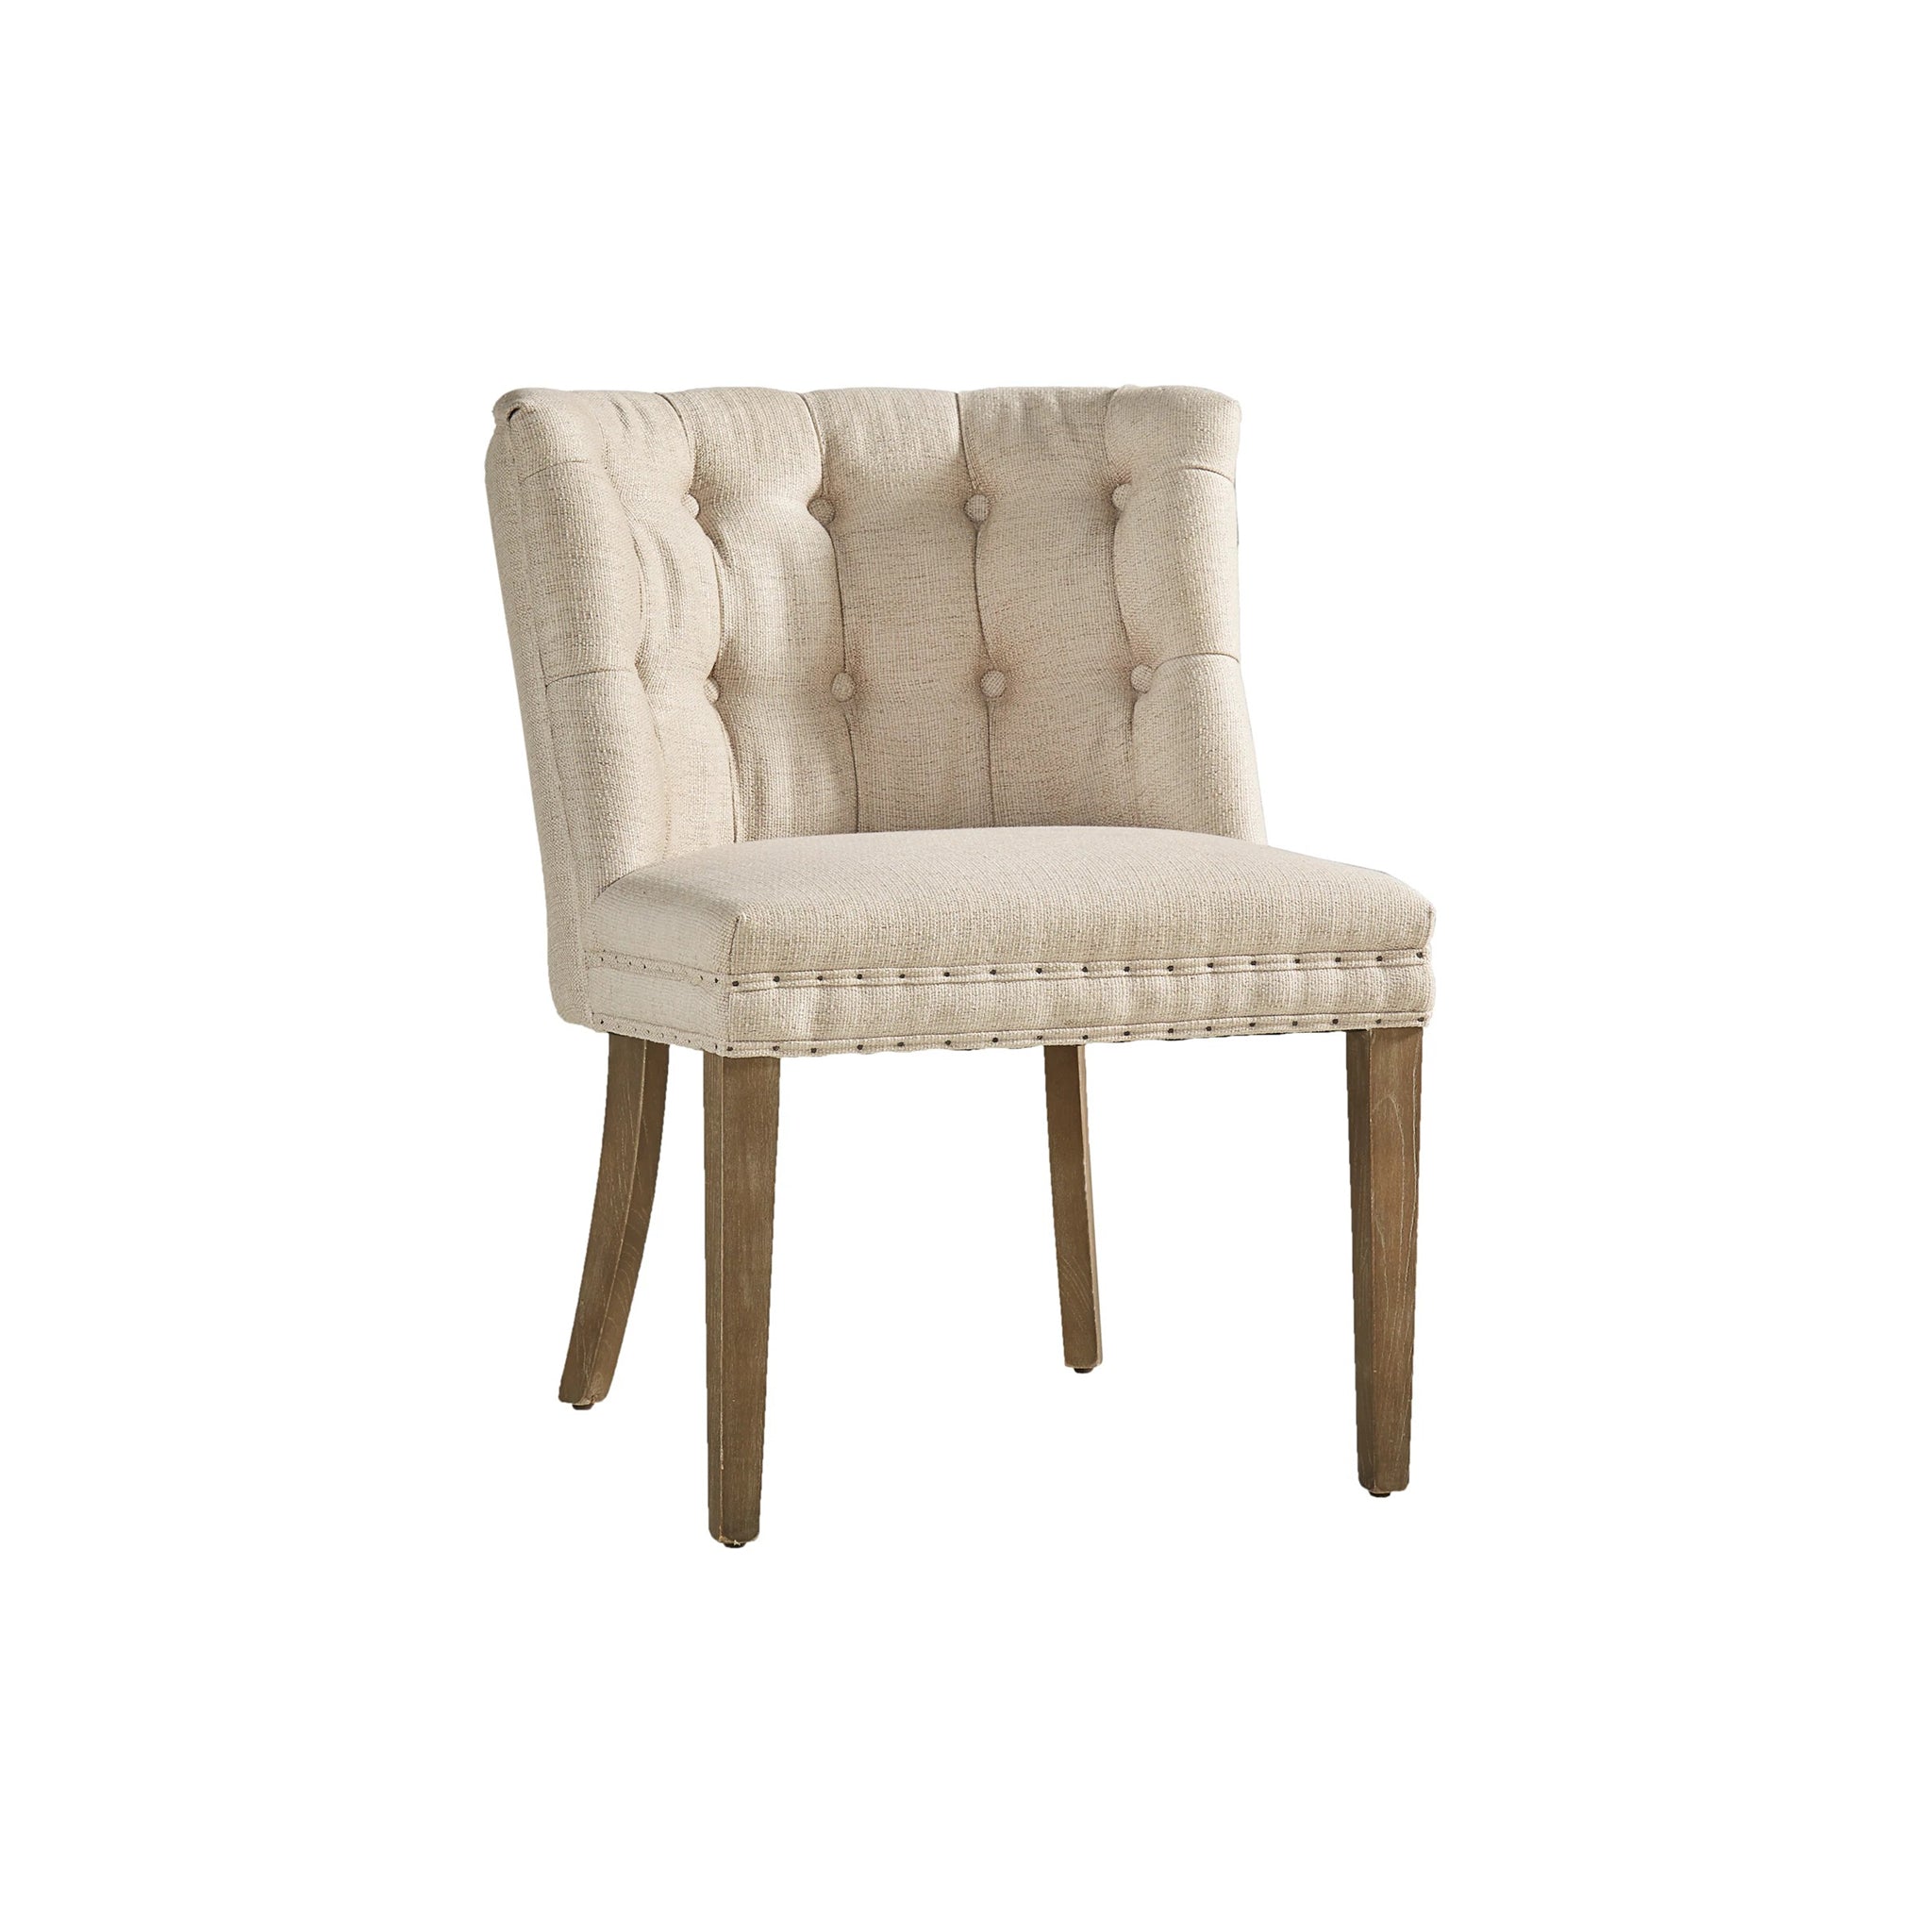 Tufted Linen and Oak Barrel Chair